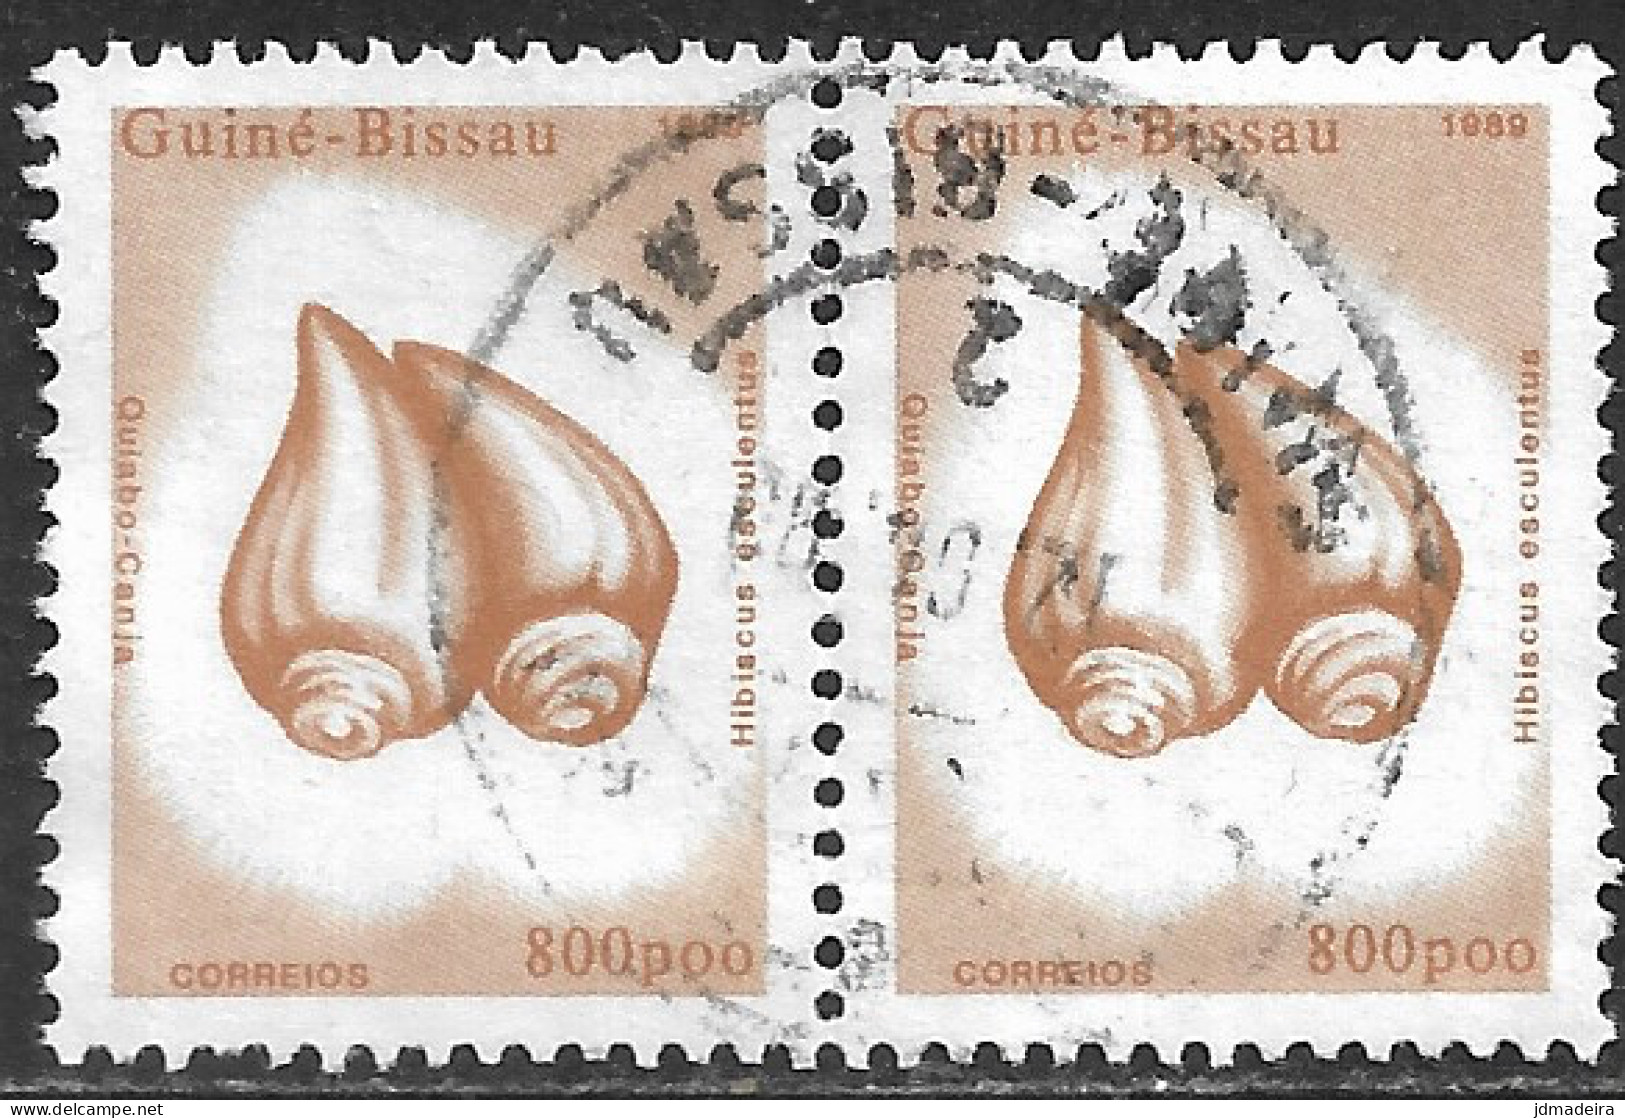 GUINE BISSAU – 1989 Vegetables 800P00 Pair Of Used Stamps - Guinea-Bissau